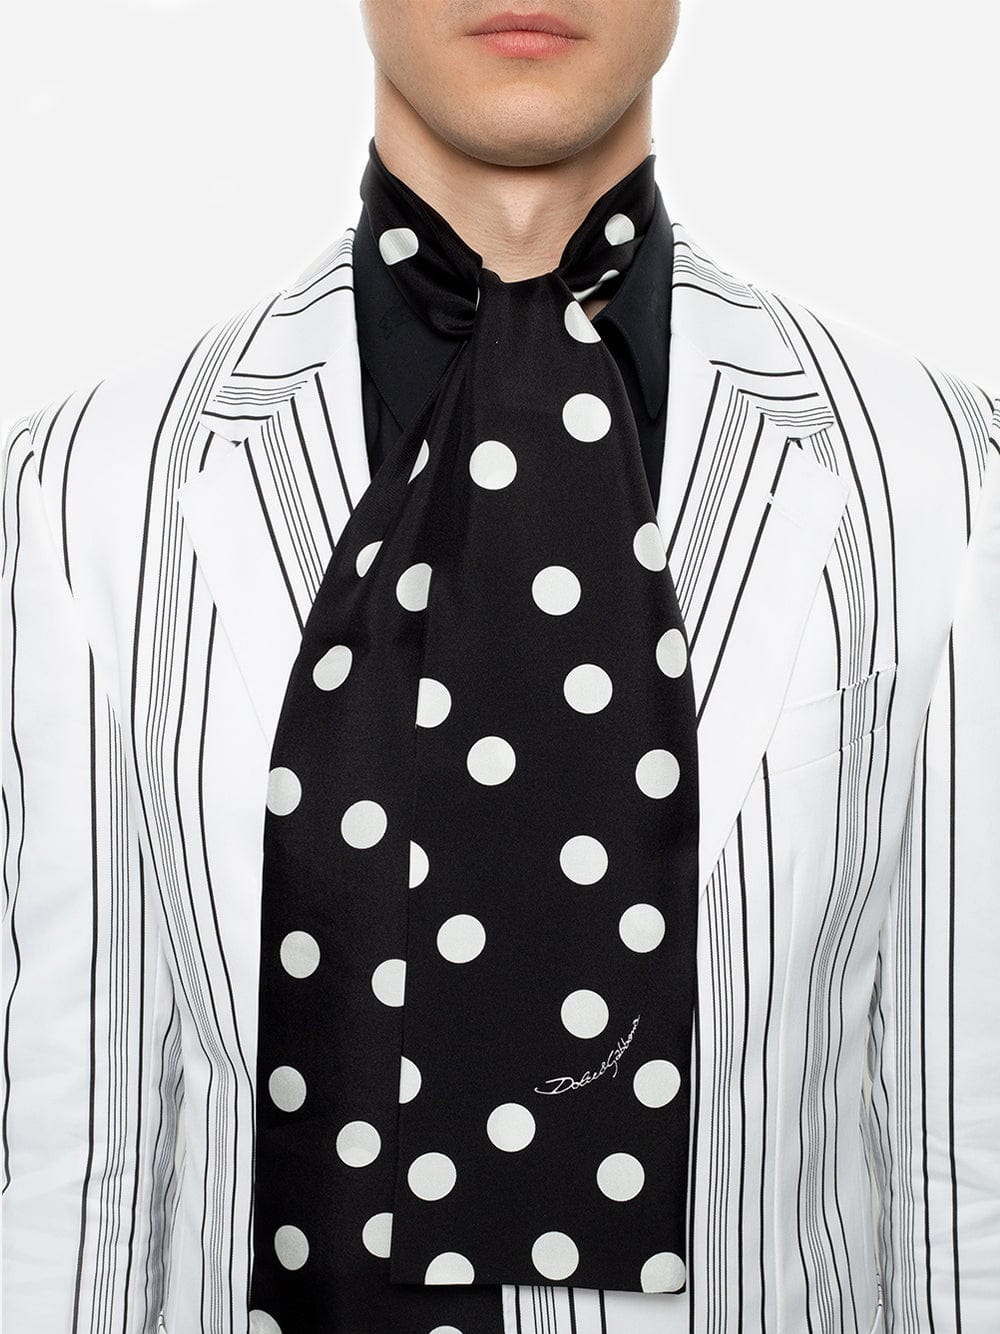 Dolce & Gabbana Black Polka Dots Scarf Neck Wrap Shawl Silk Scarf